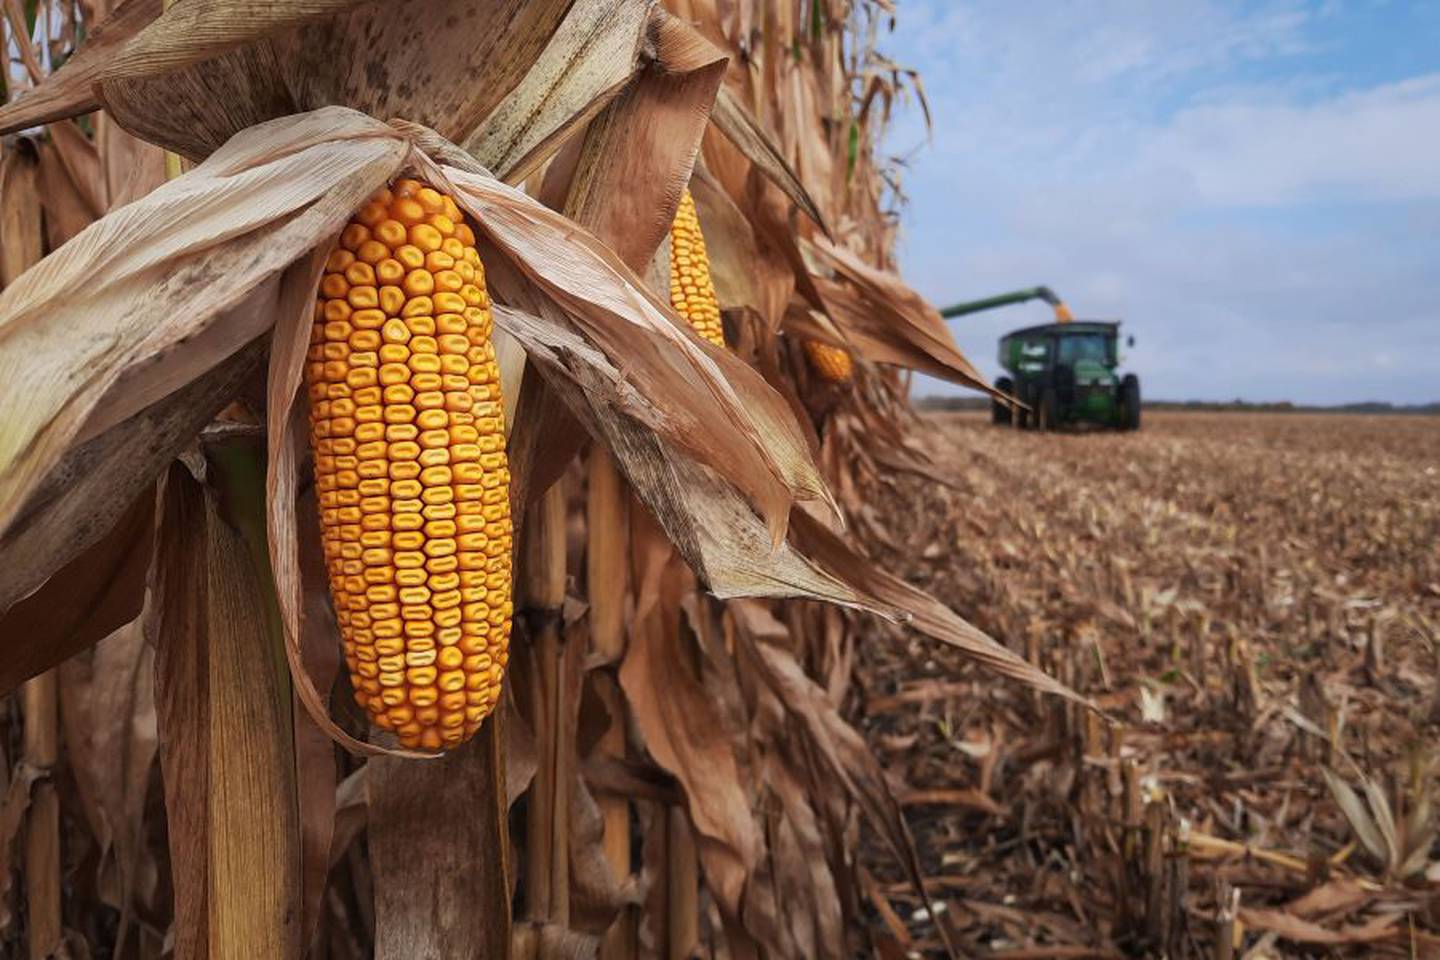 Corn — First place: “Minnesota Corn Harvest” by Kari Schiefelbein.